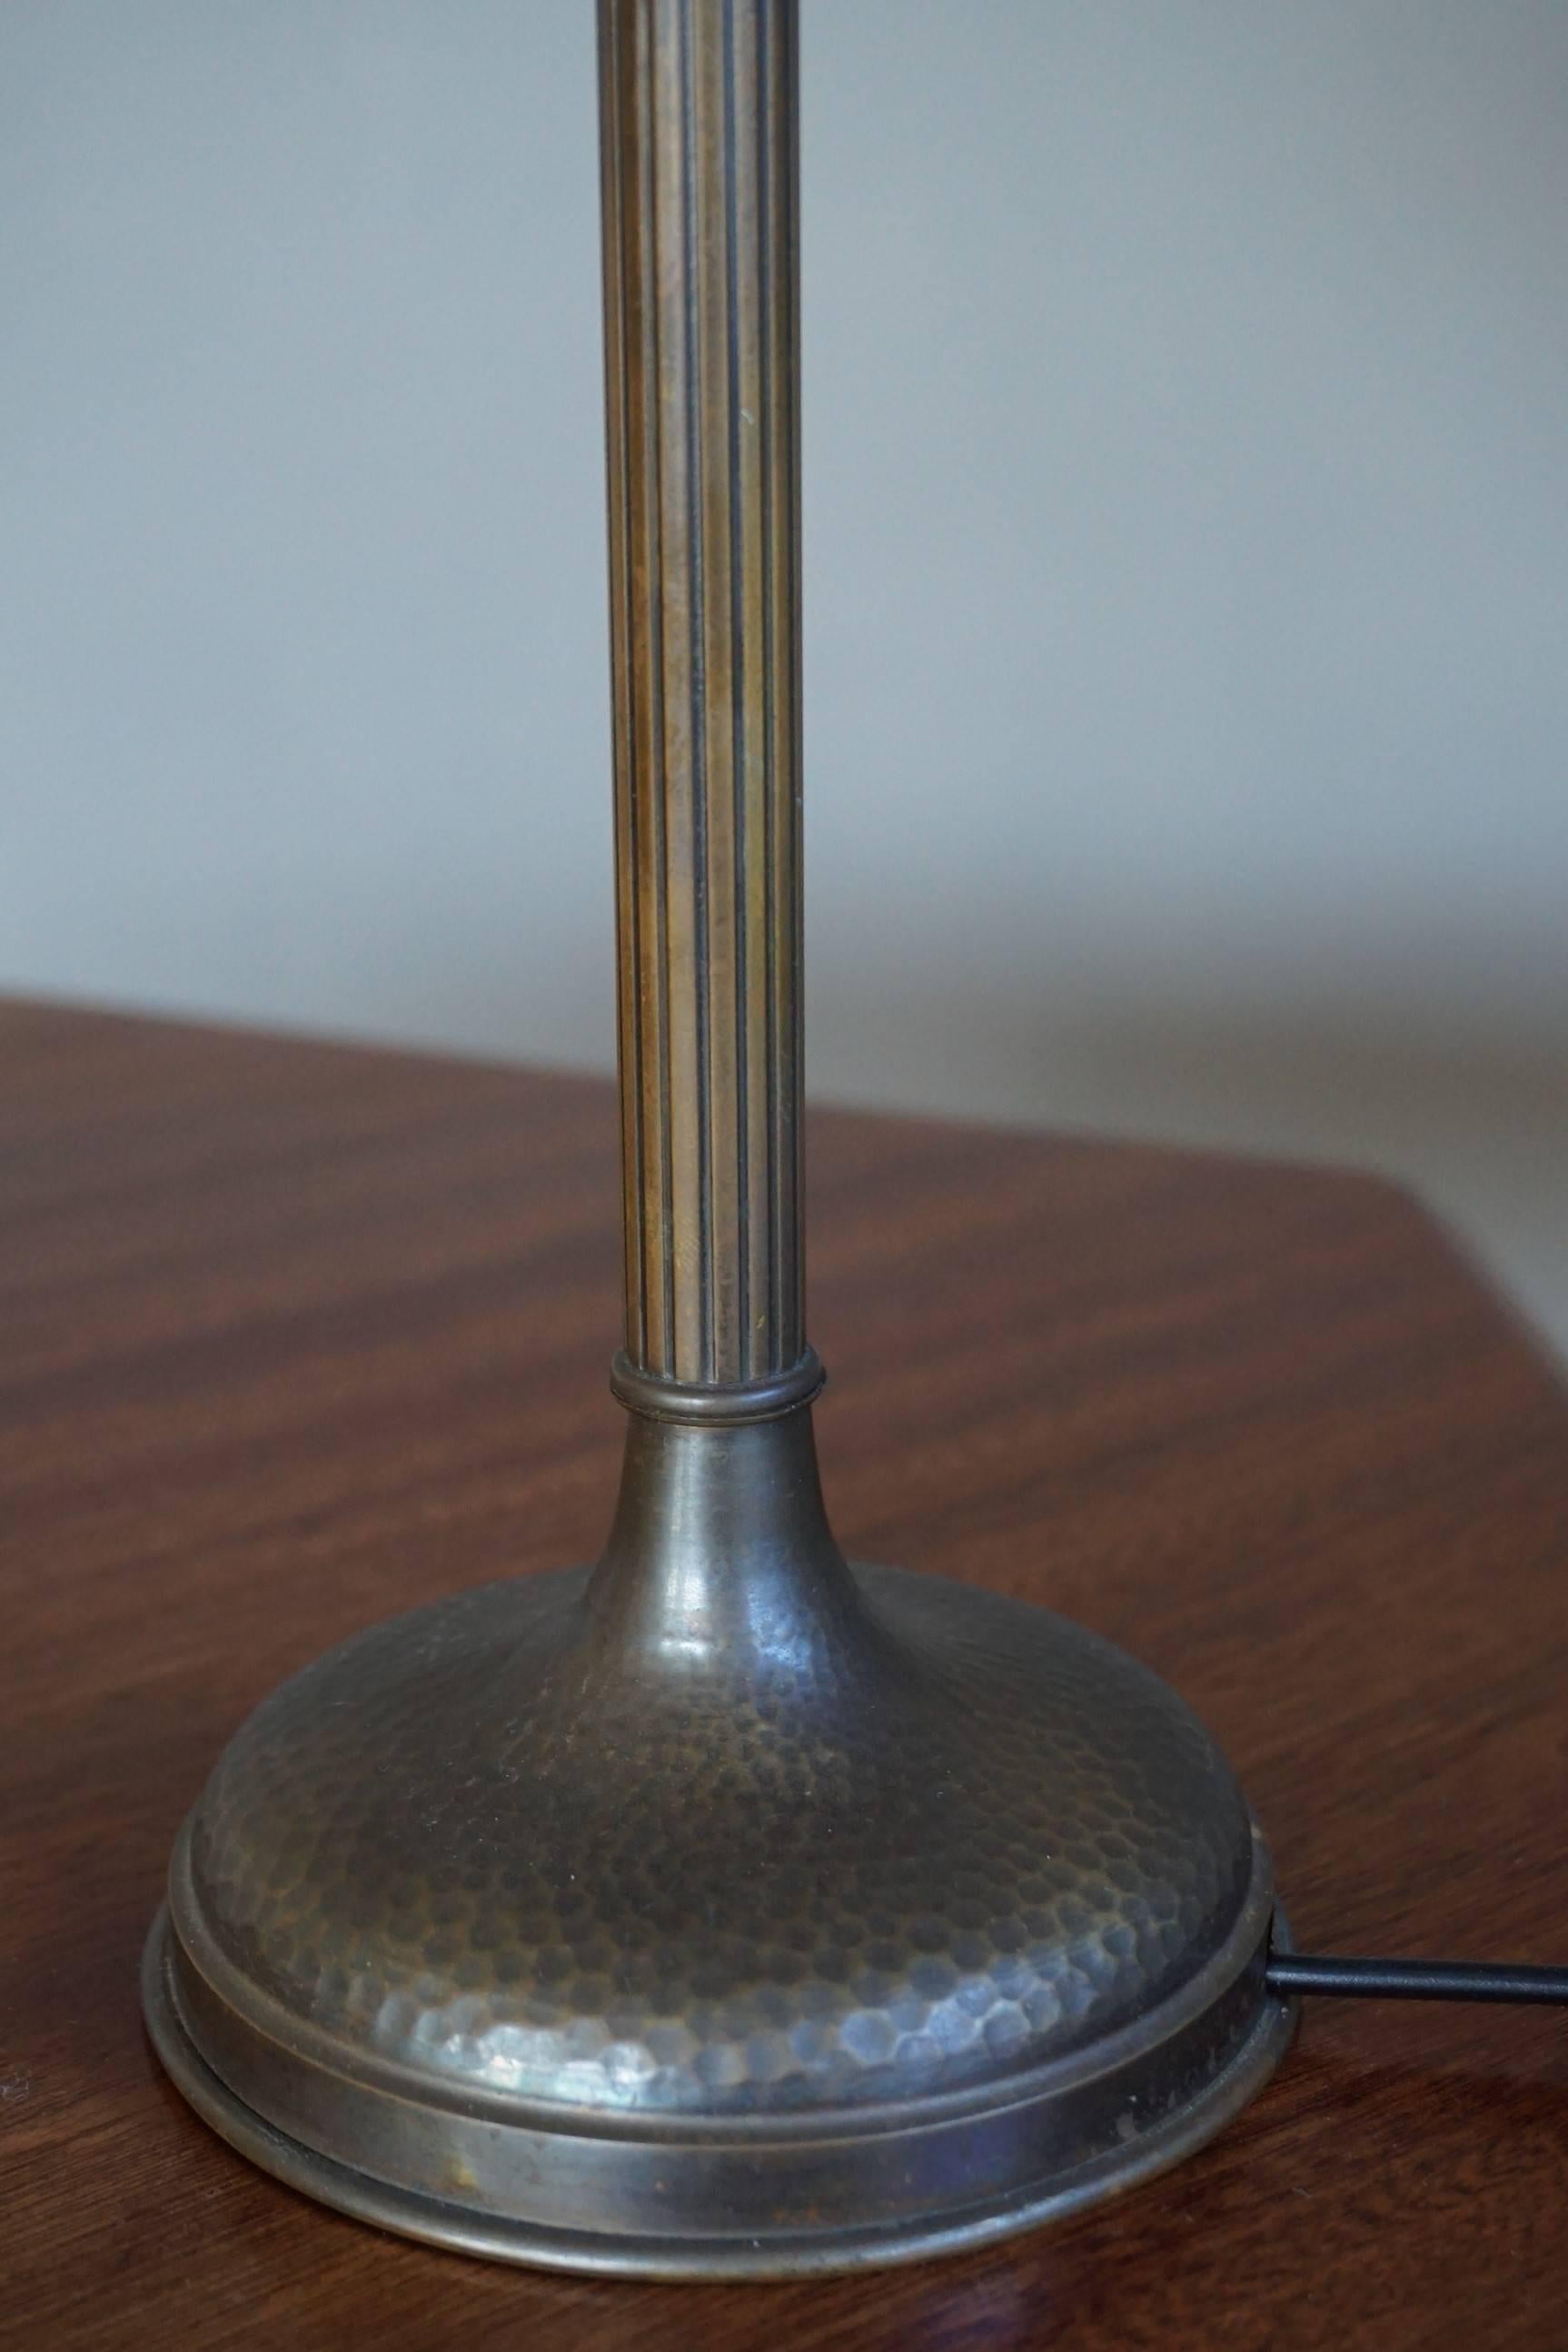 vintage copper table lamp